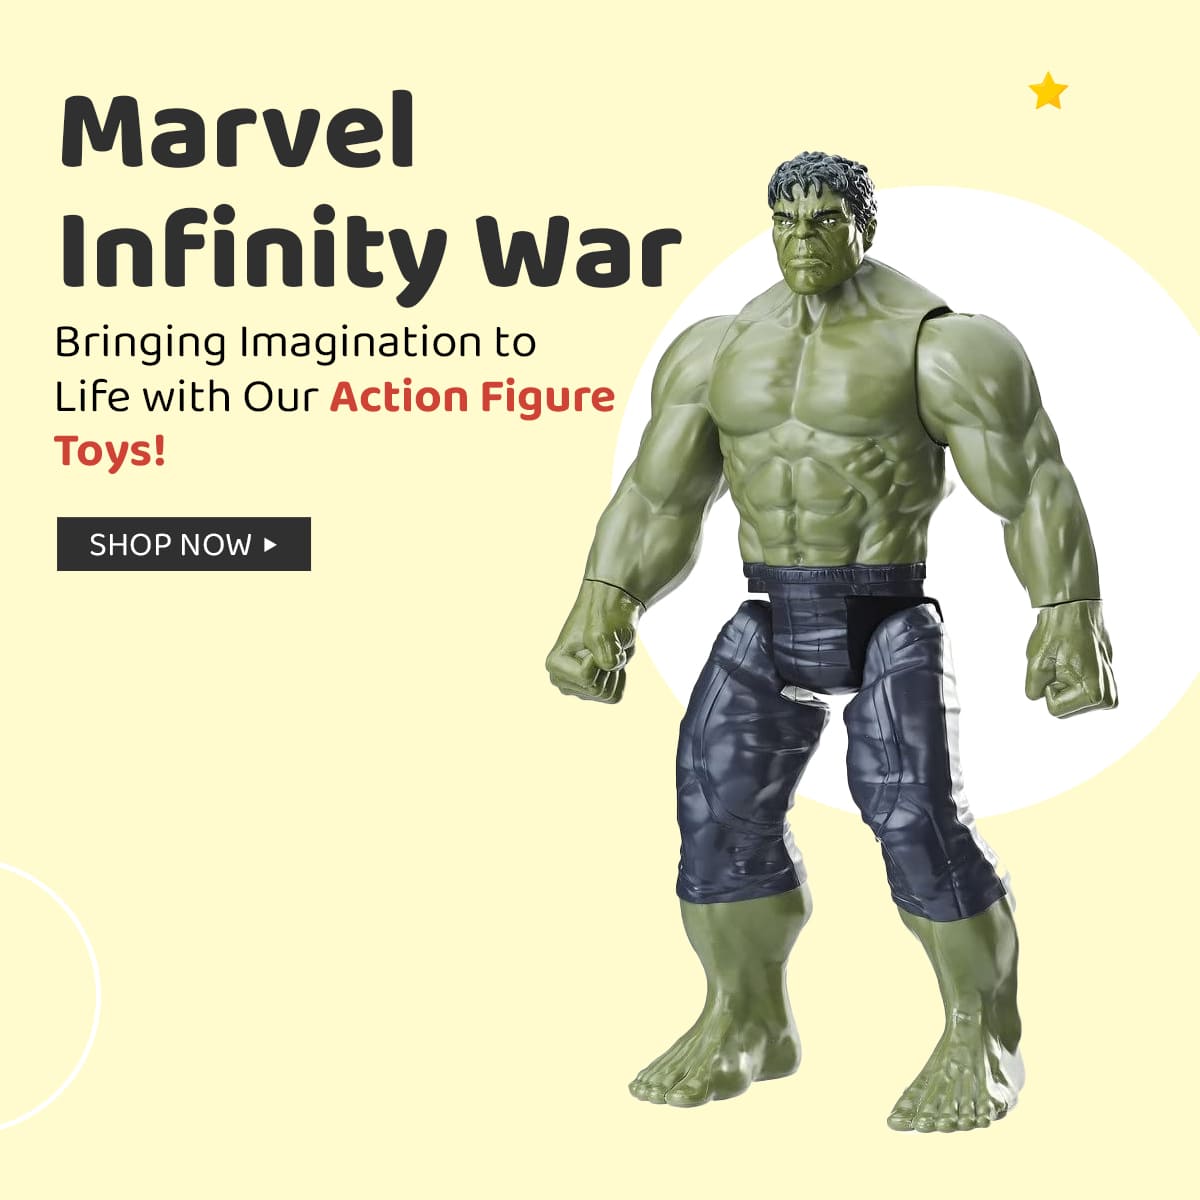 Marvel Infinity War Toys